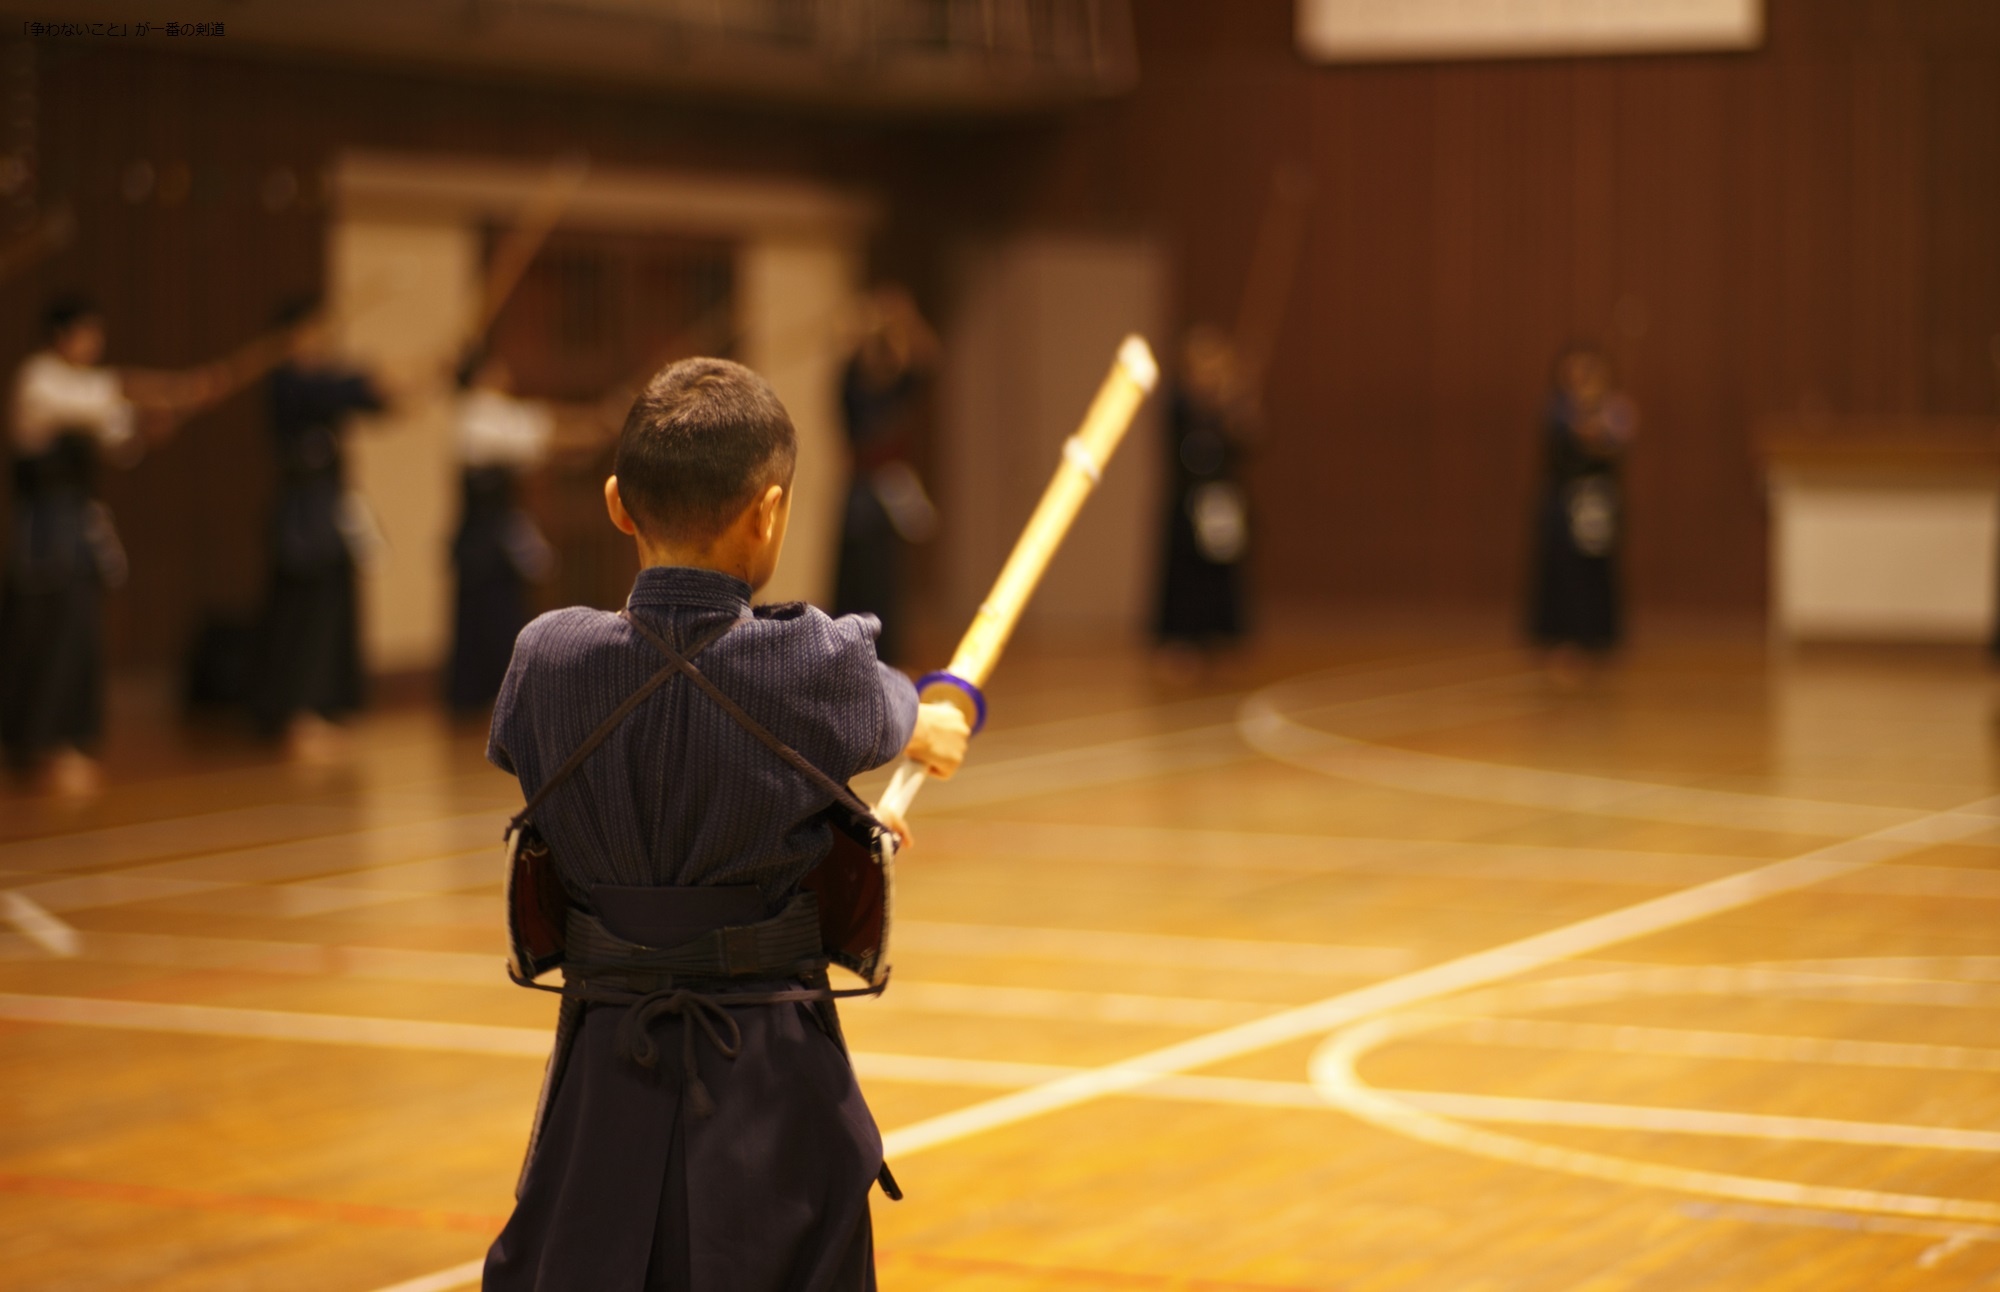 Sword Fighting: Training with a shinai - a bamboo sword, Kendo swordsmanship. 2000x1300 HD Background.